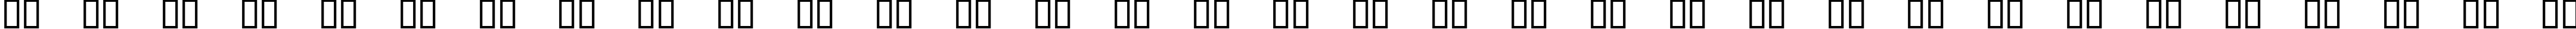 Пример написания русского алфавита шрифтом Wingdings 2